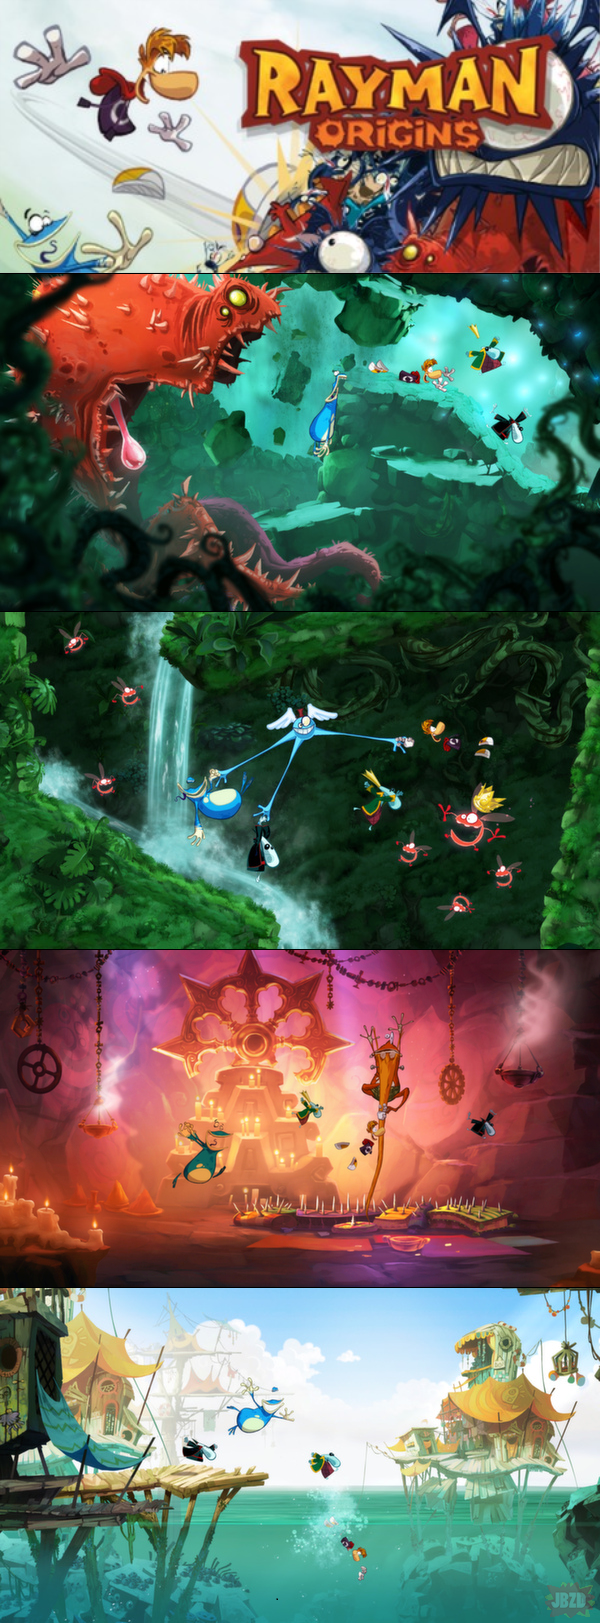 Rayman Origins na PC za darmo w Ubisoft Store